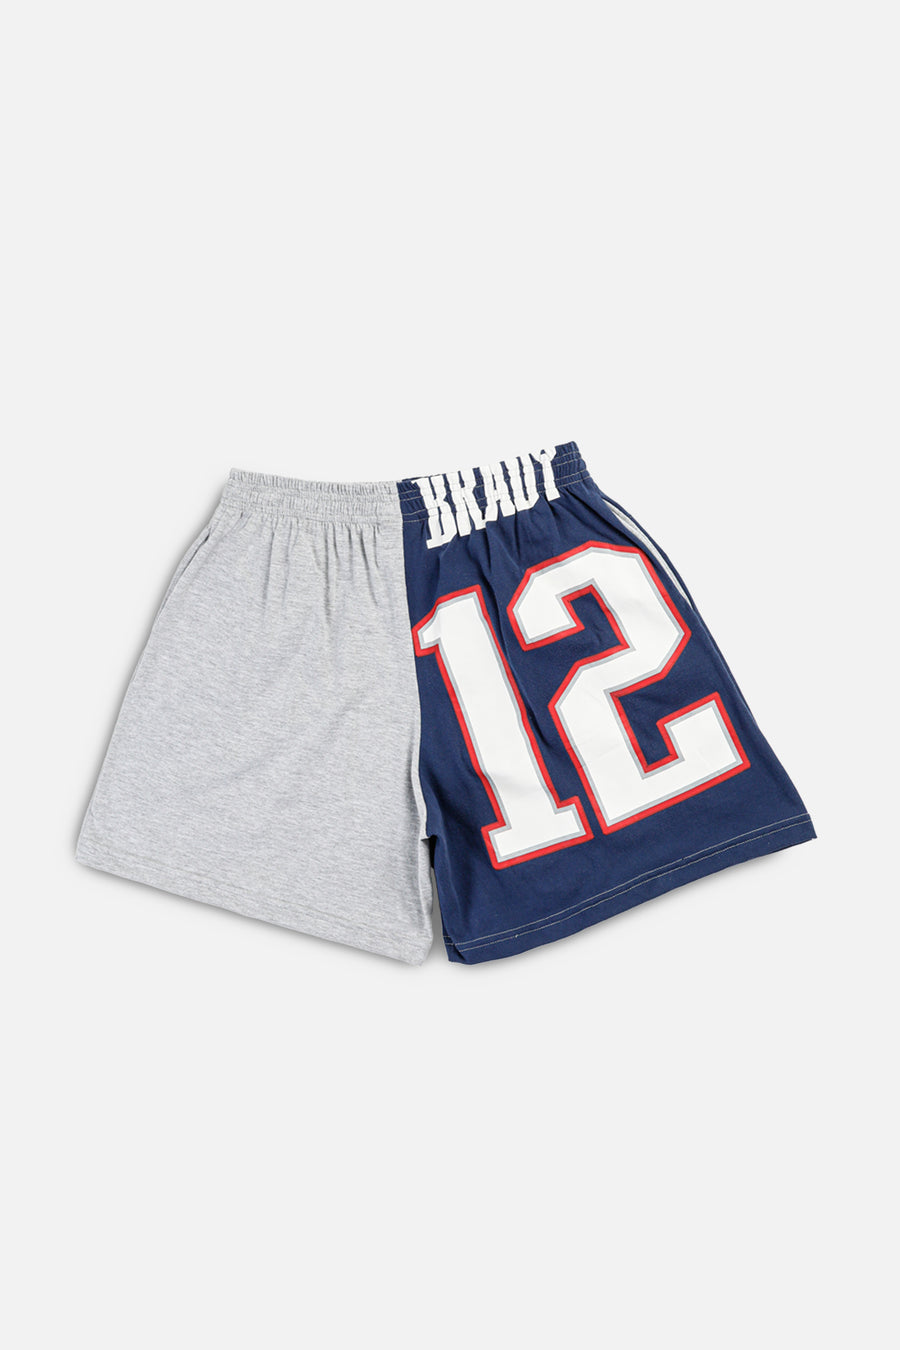 Unisex Rework New England Patriots NFL Tee Shorts - M